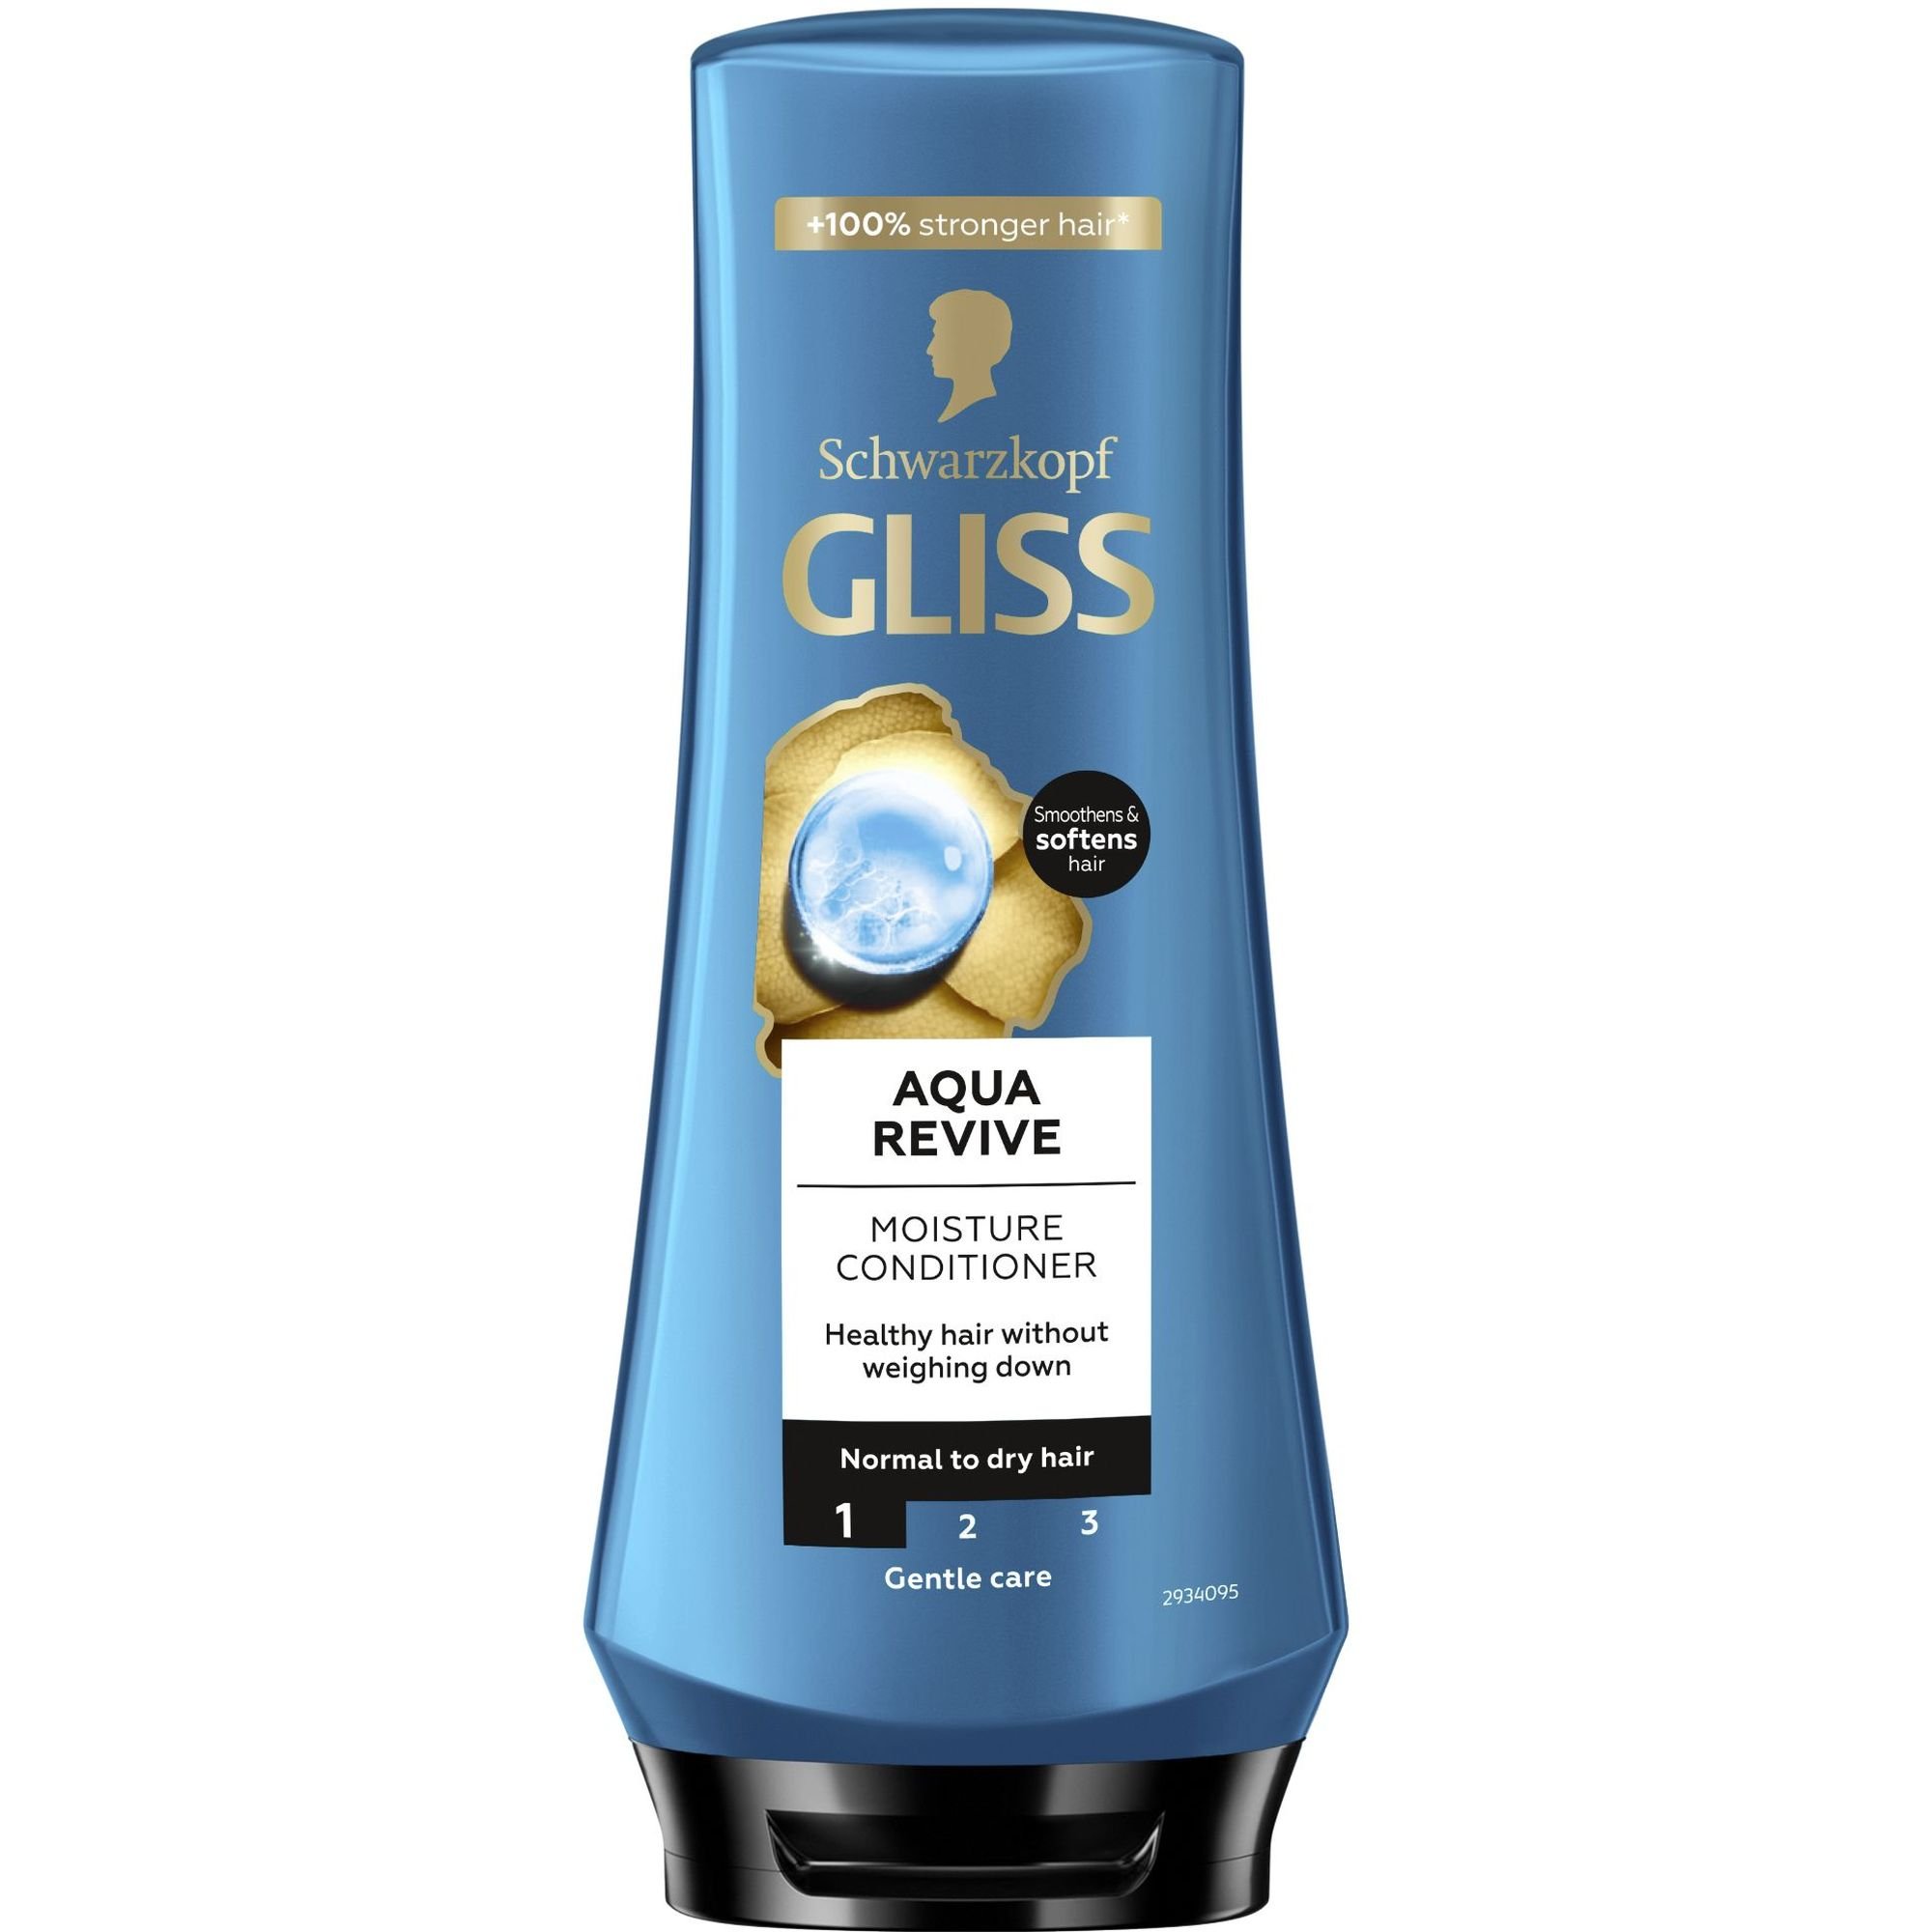 Бальзам Gliss Aqua Revive для нормального та сухого волосся 200 мл - фото 1